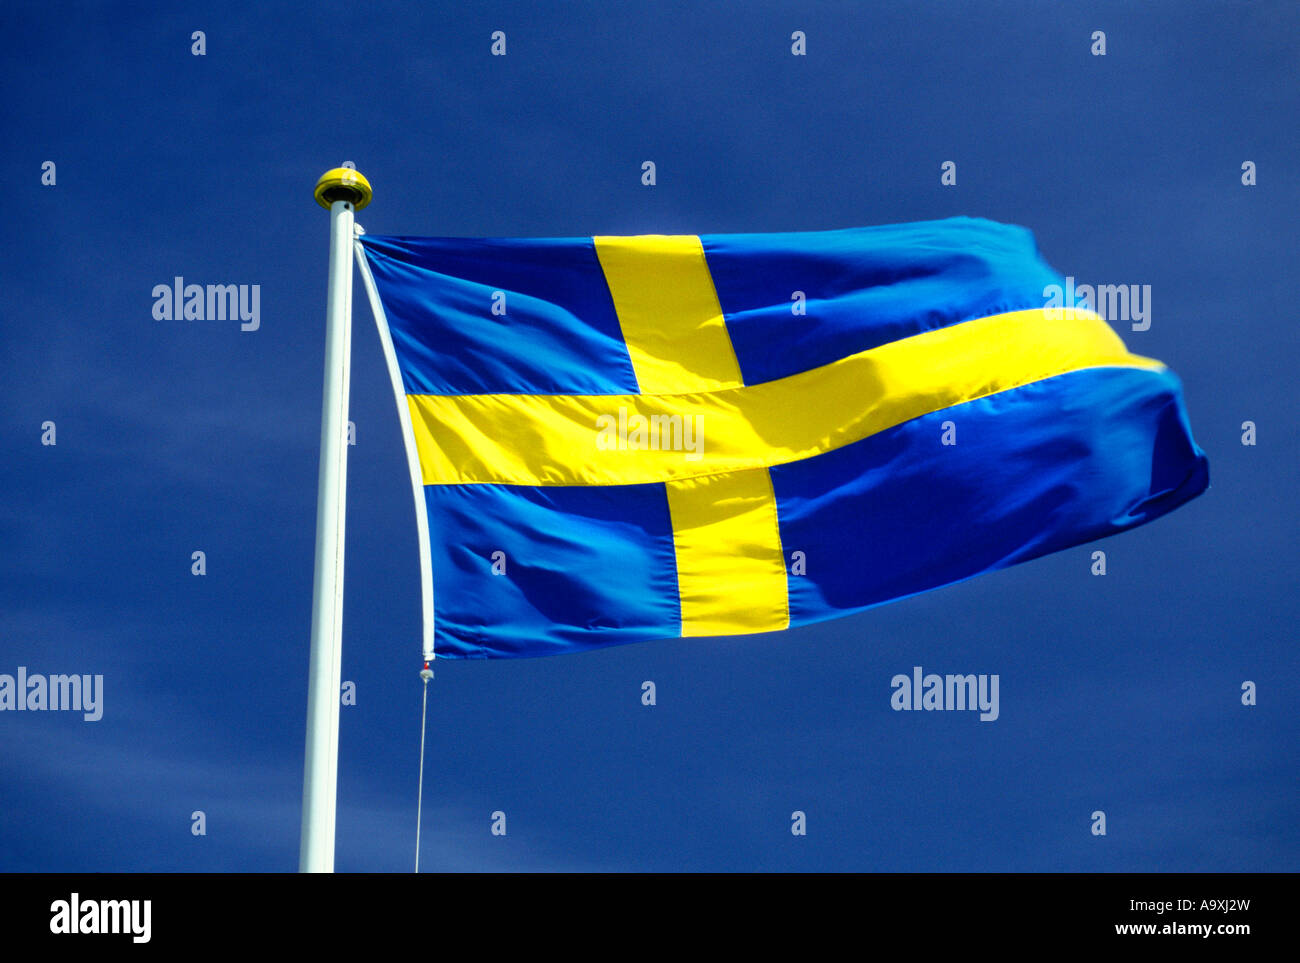 SINGLE FULL SWEDISH FLAG FLYING ON FLAGPOLE IN CLEAR BLUE SKY Stock Photo